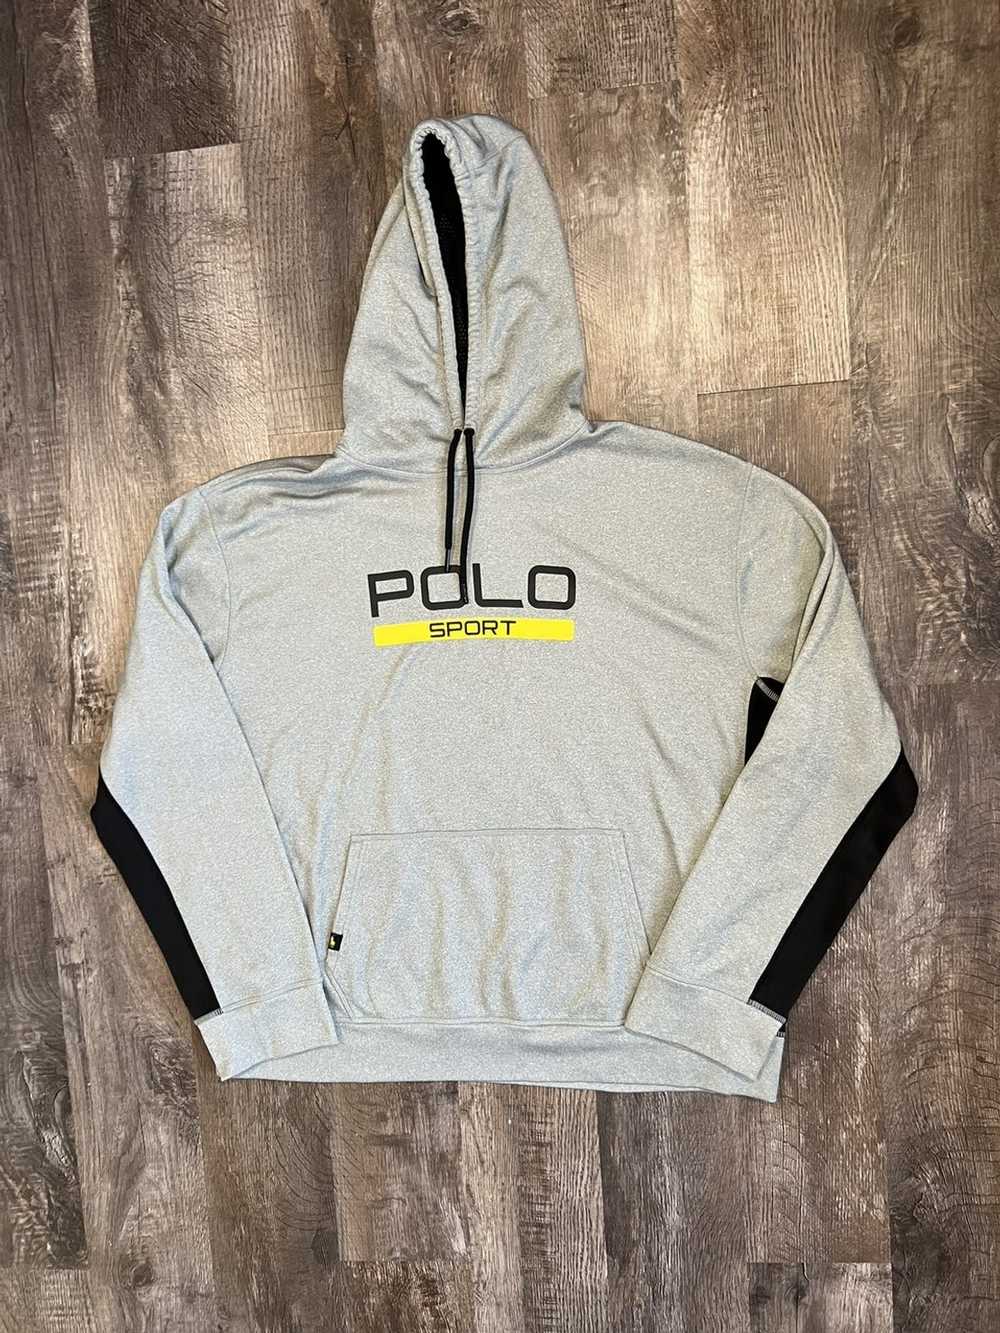 Polo Ralph Lauren Polo Sport Hoodie - image 1